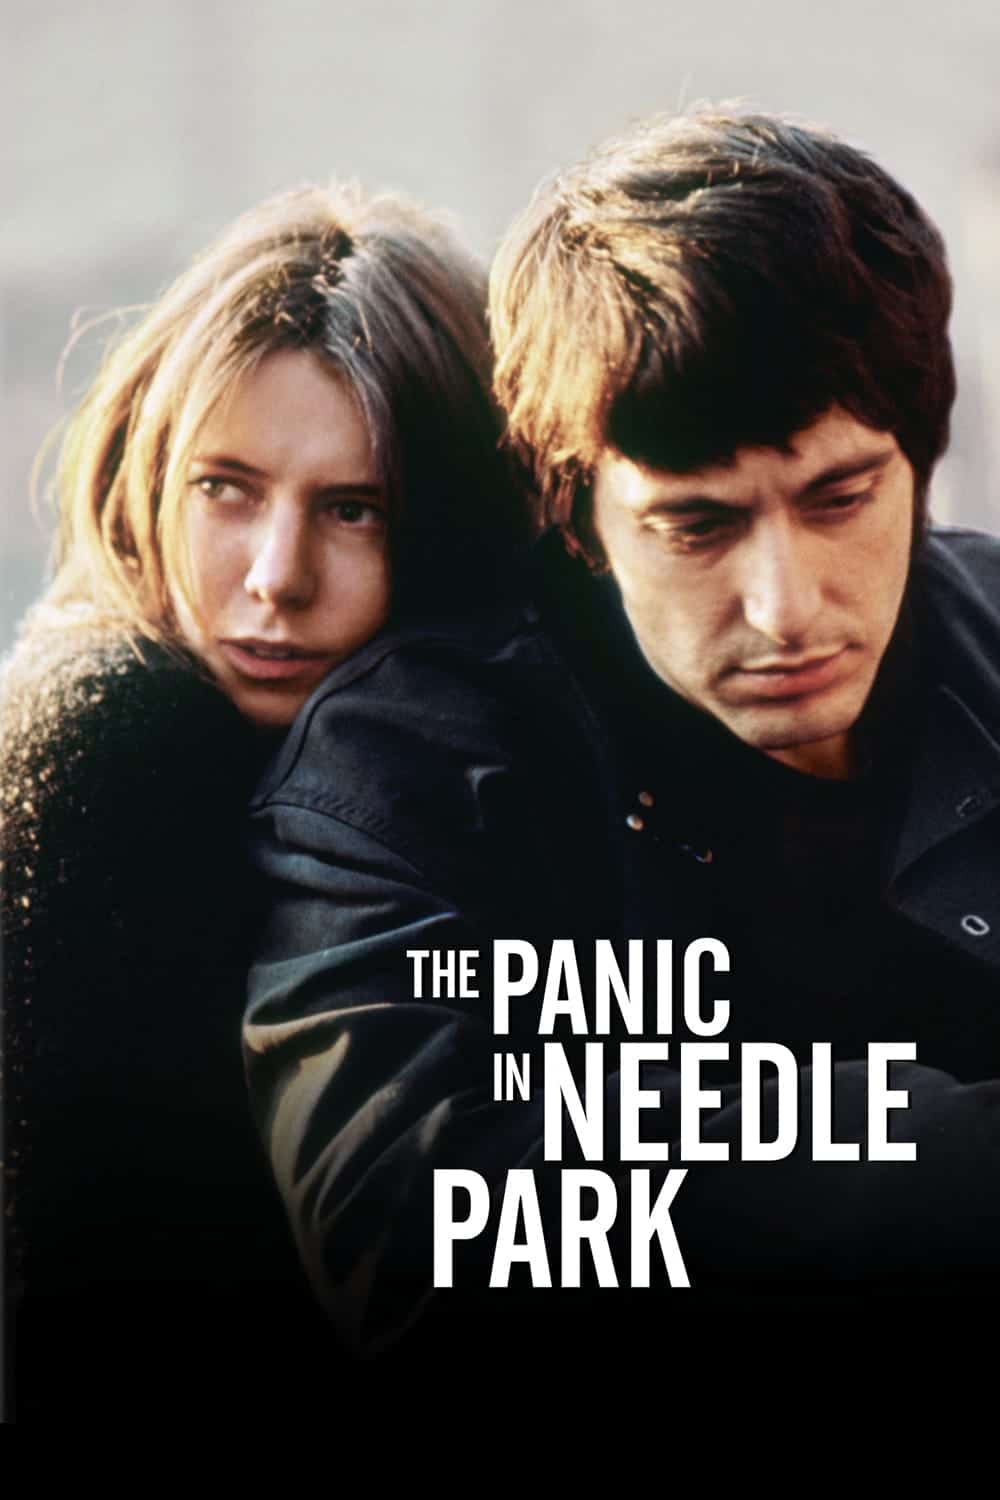 Plakat von "Panik im Needle Park"